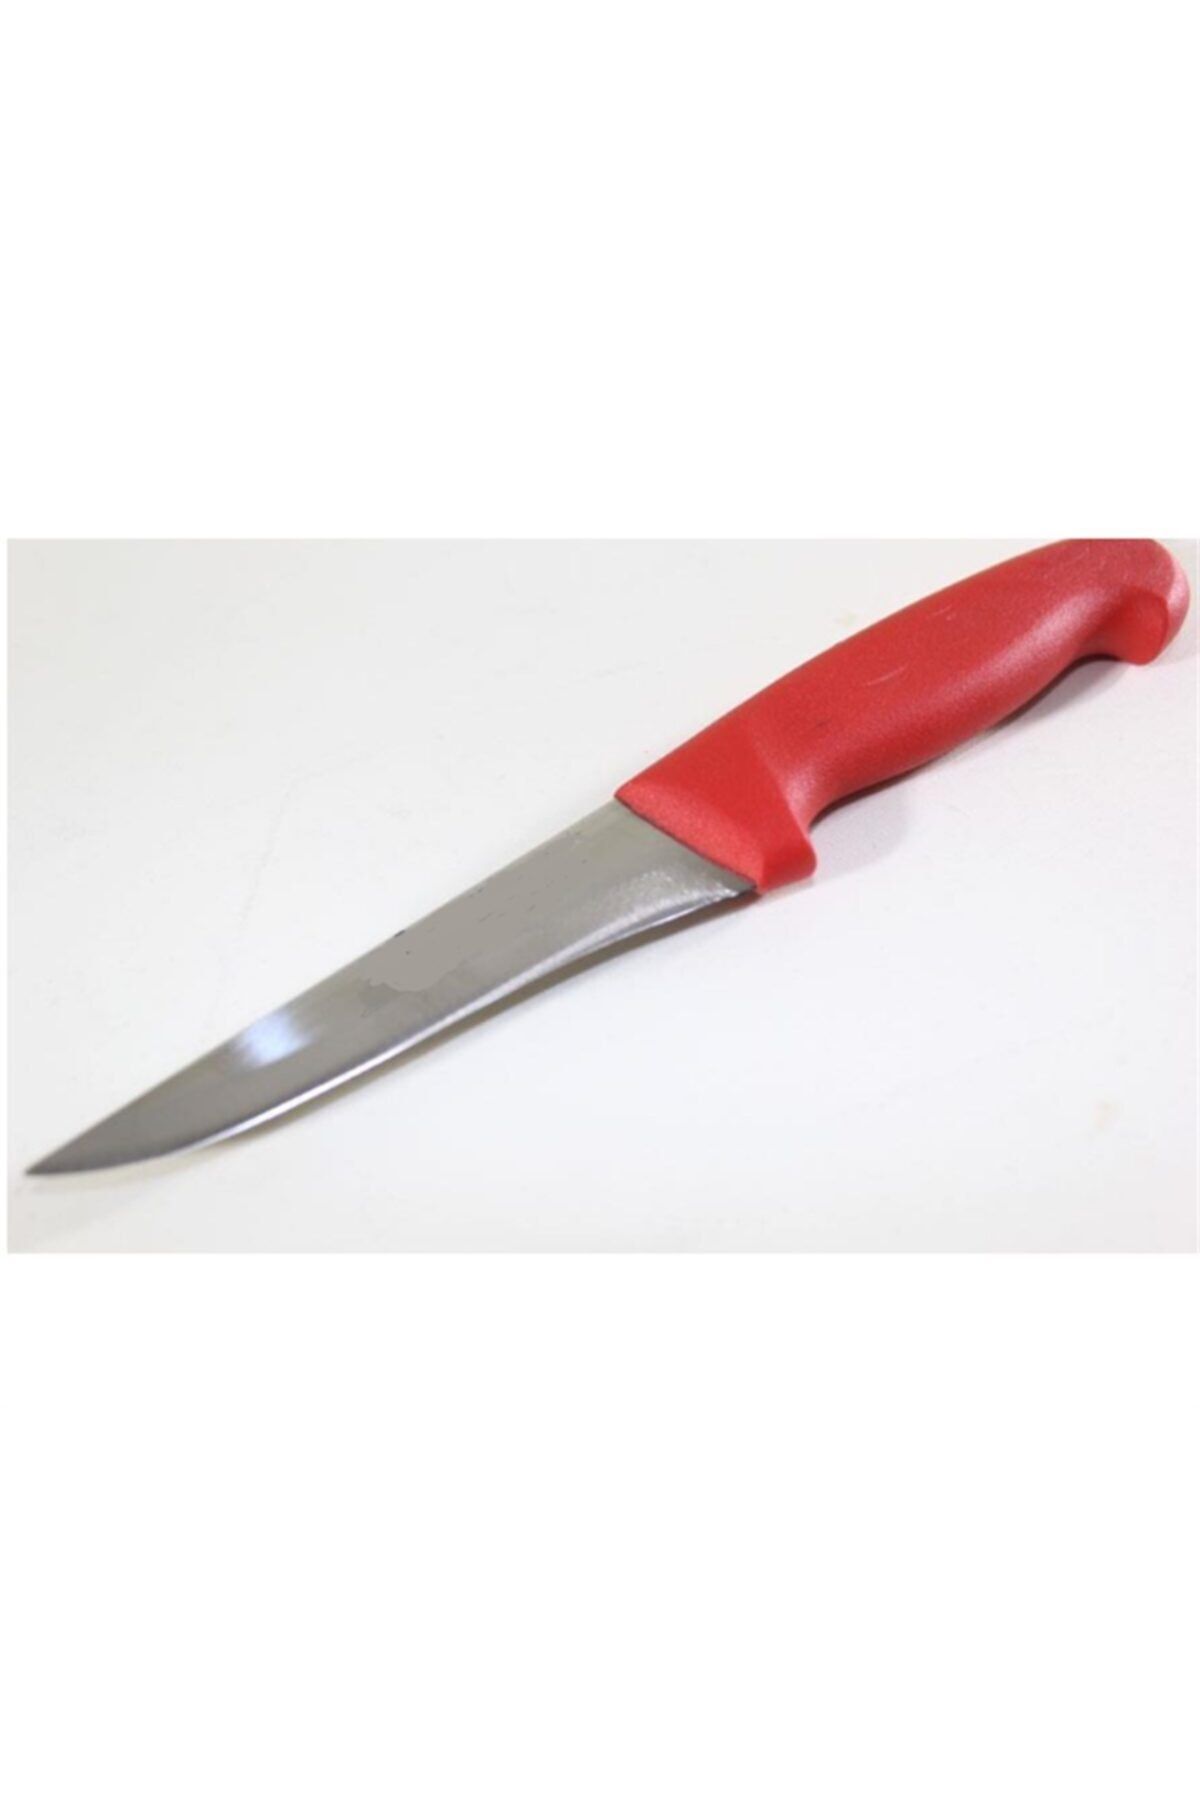 EKON Plastik Saplı Bıçak